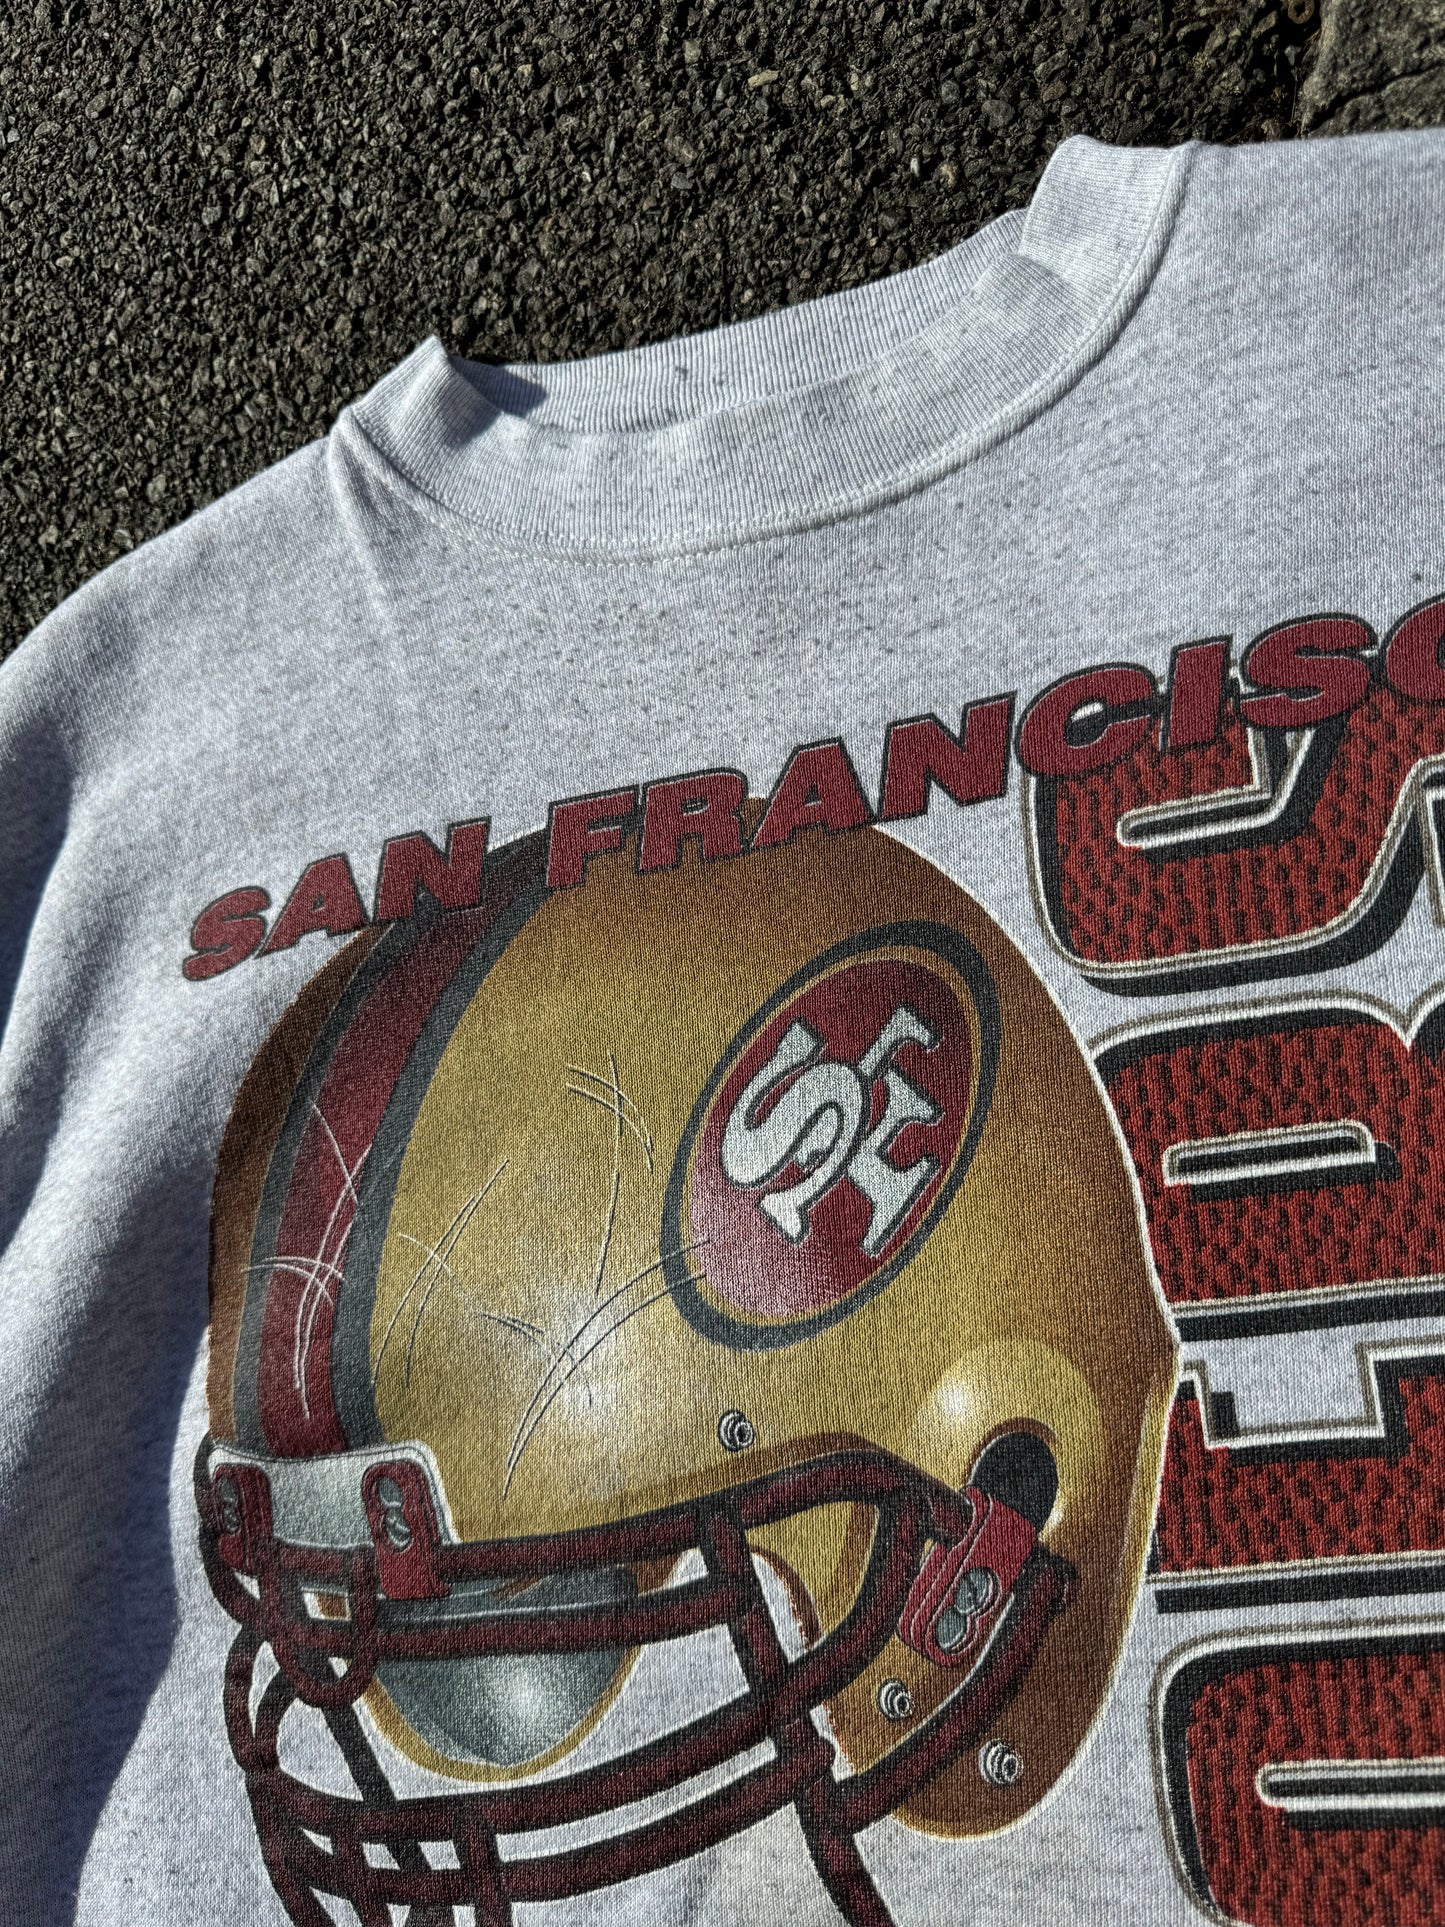 Vintage San Francisco 49ers Sweatshirt